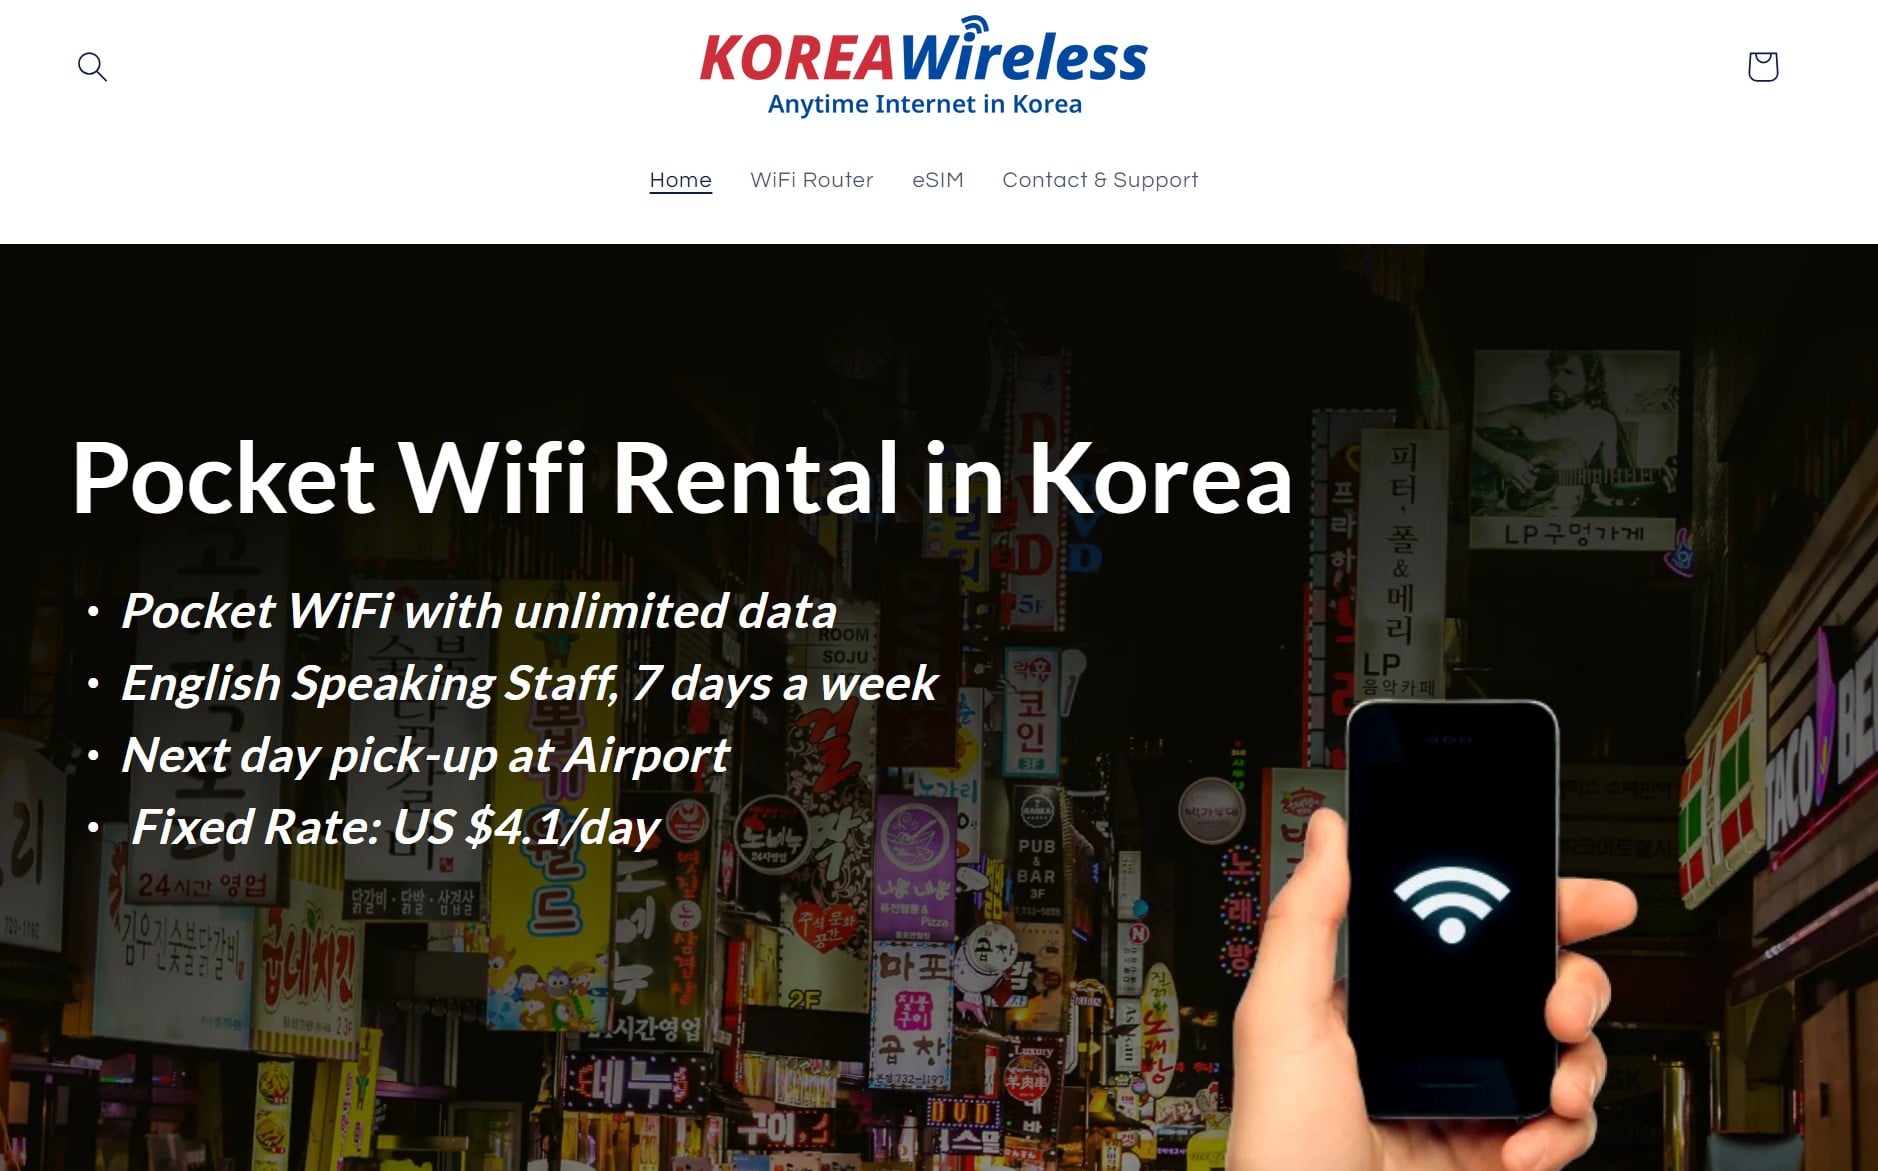 Korea Wireless